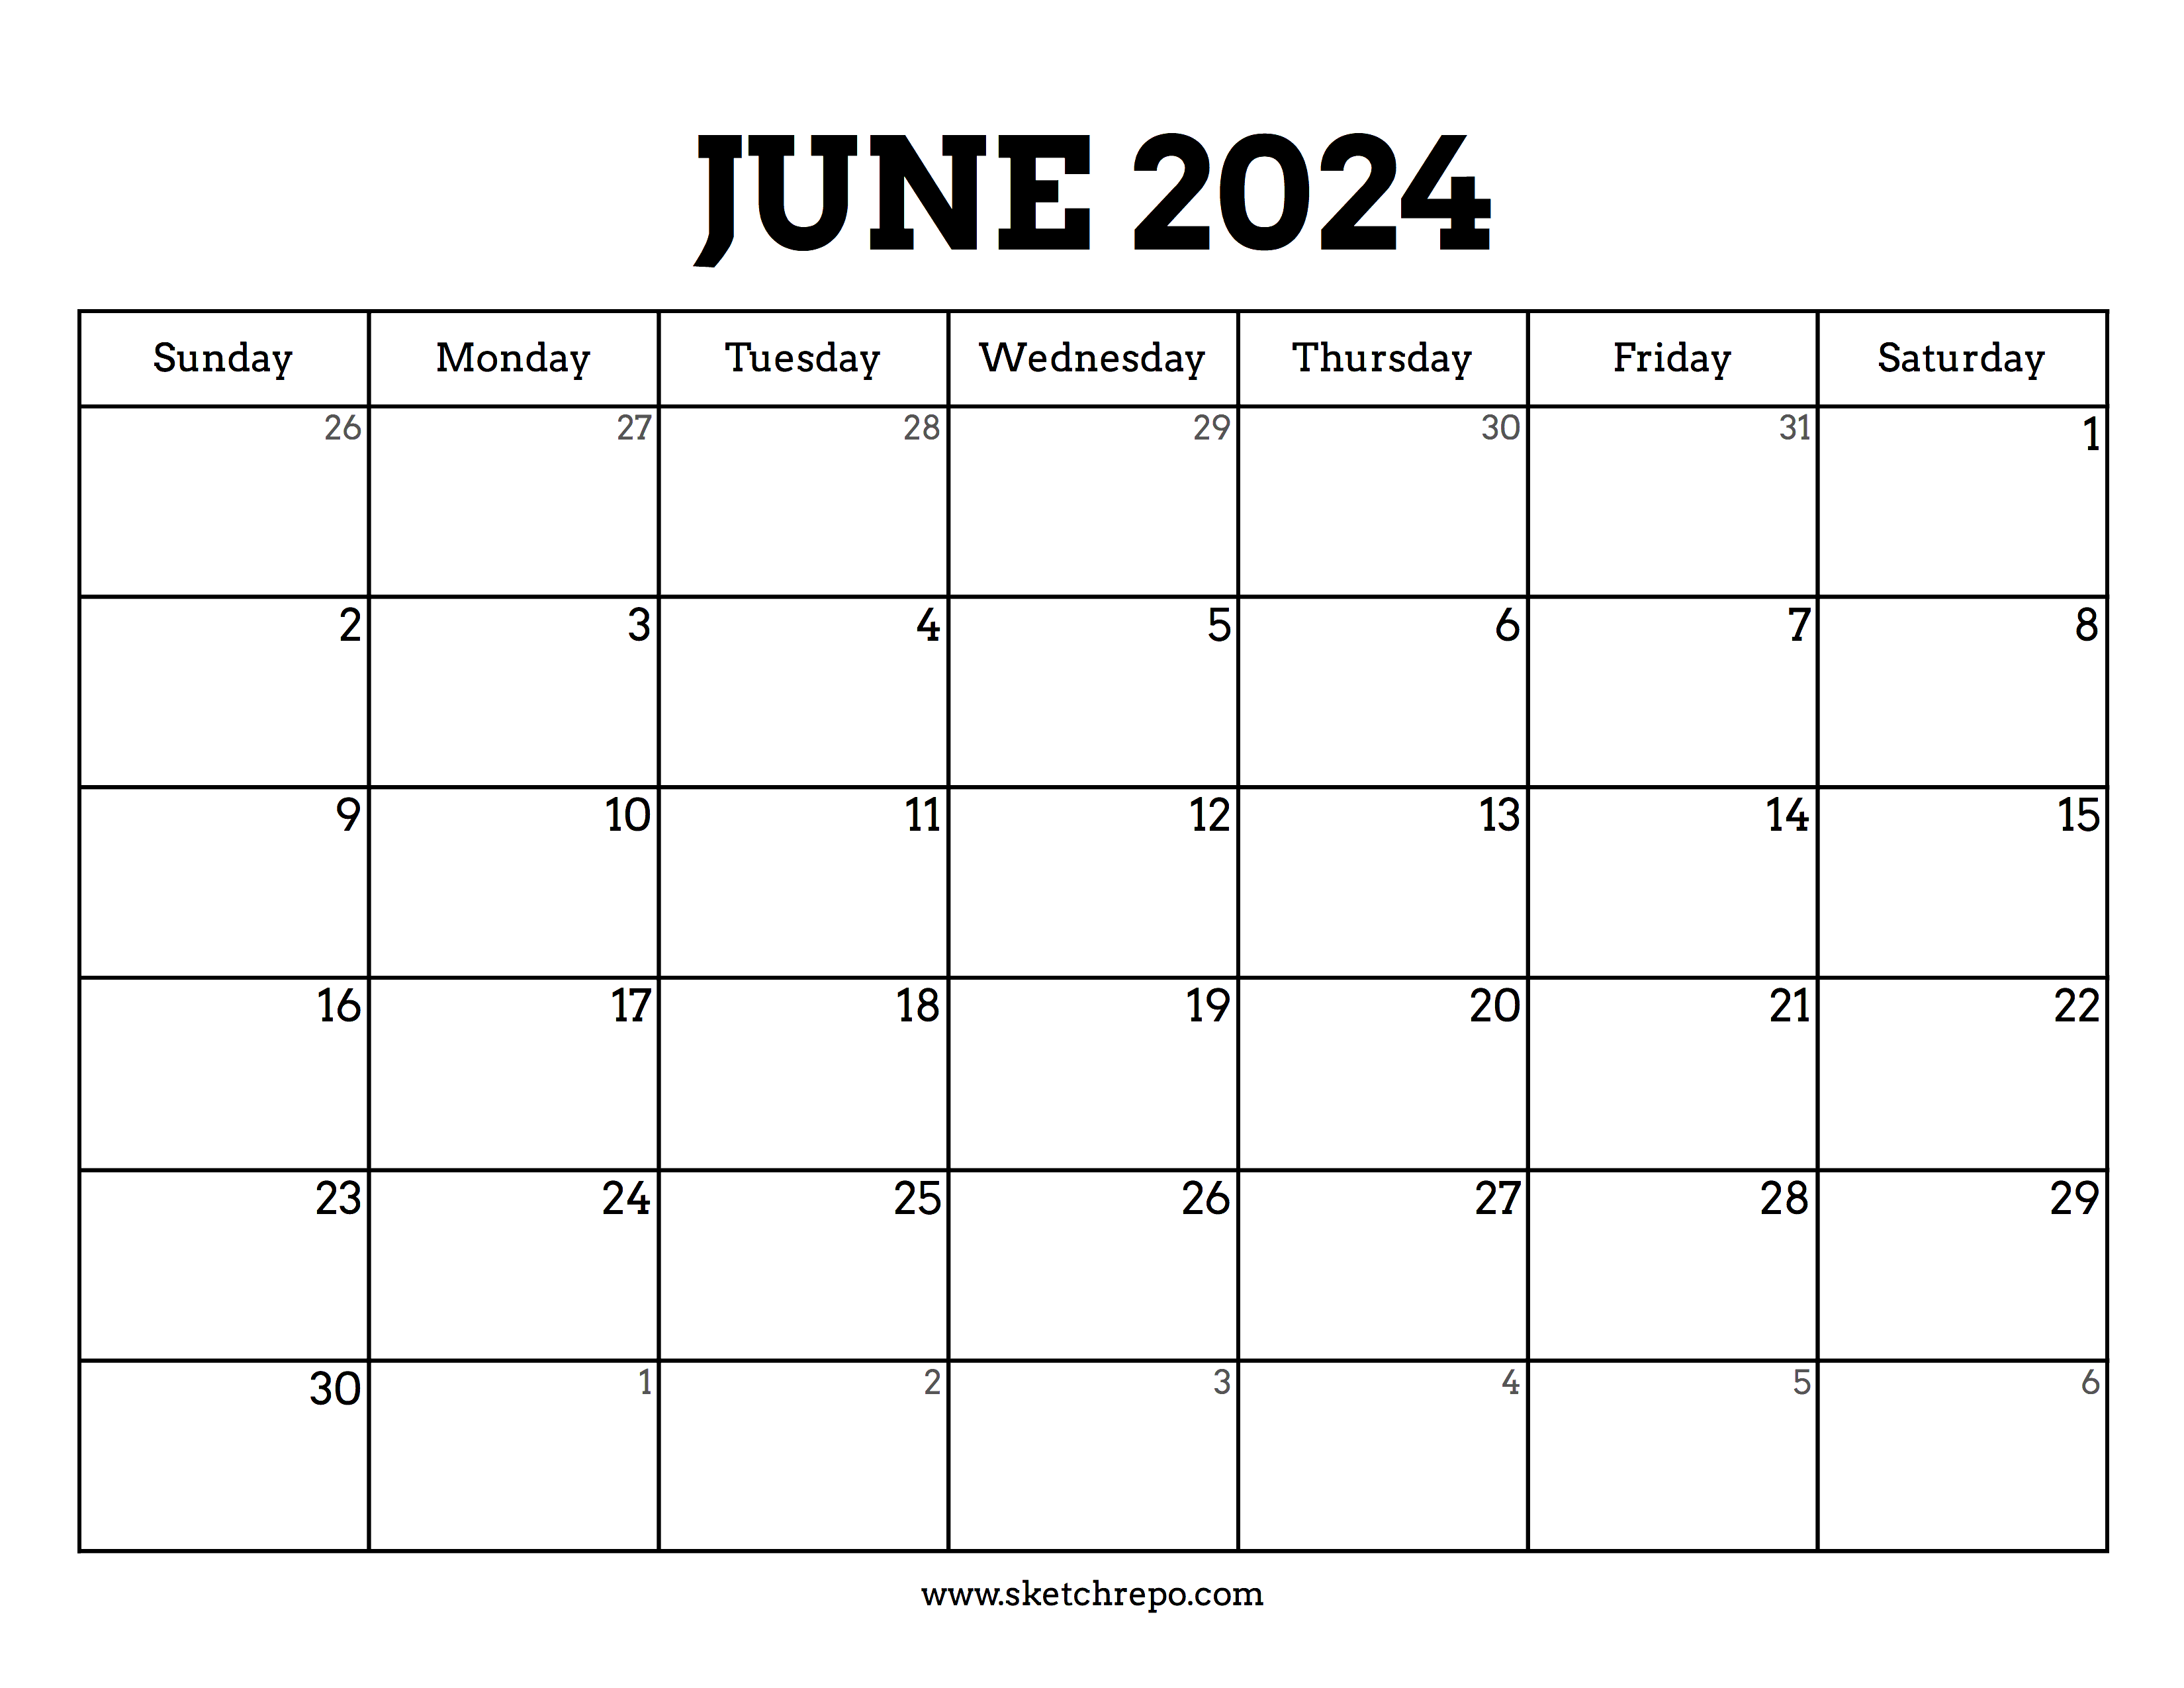 June 2024 Calendar – Sketch Repo intended for June 14 2024 Calendar